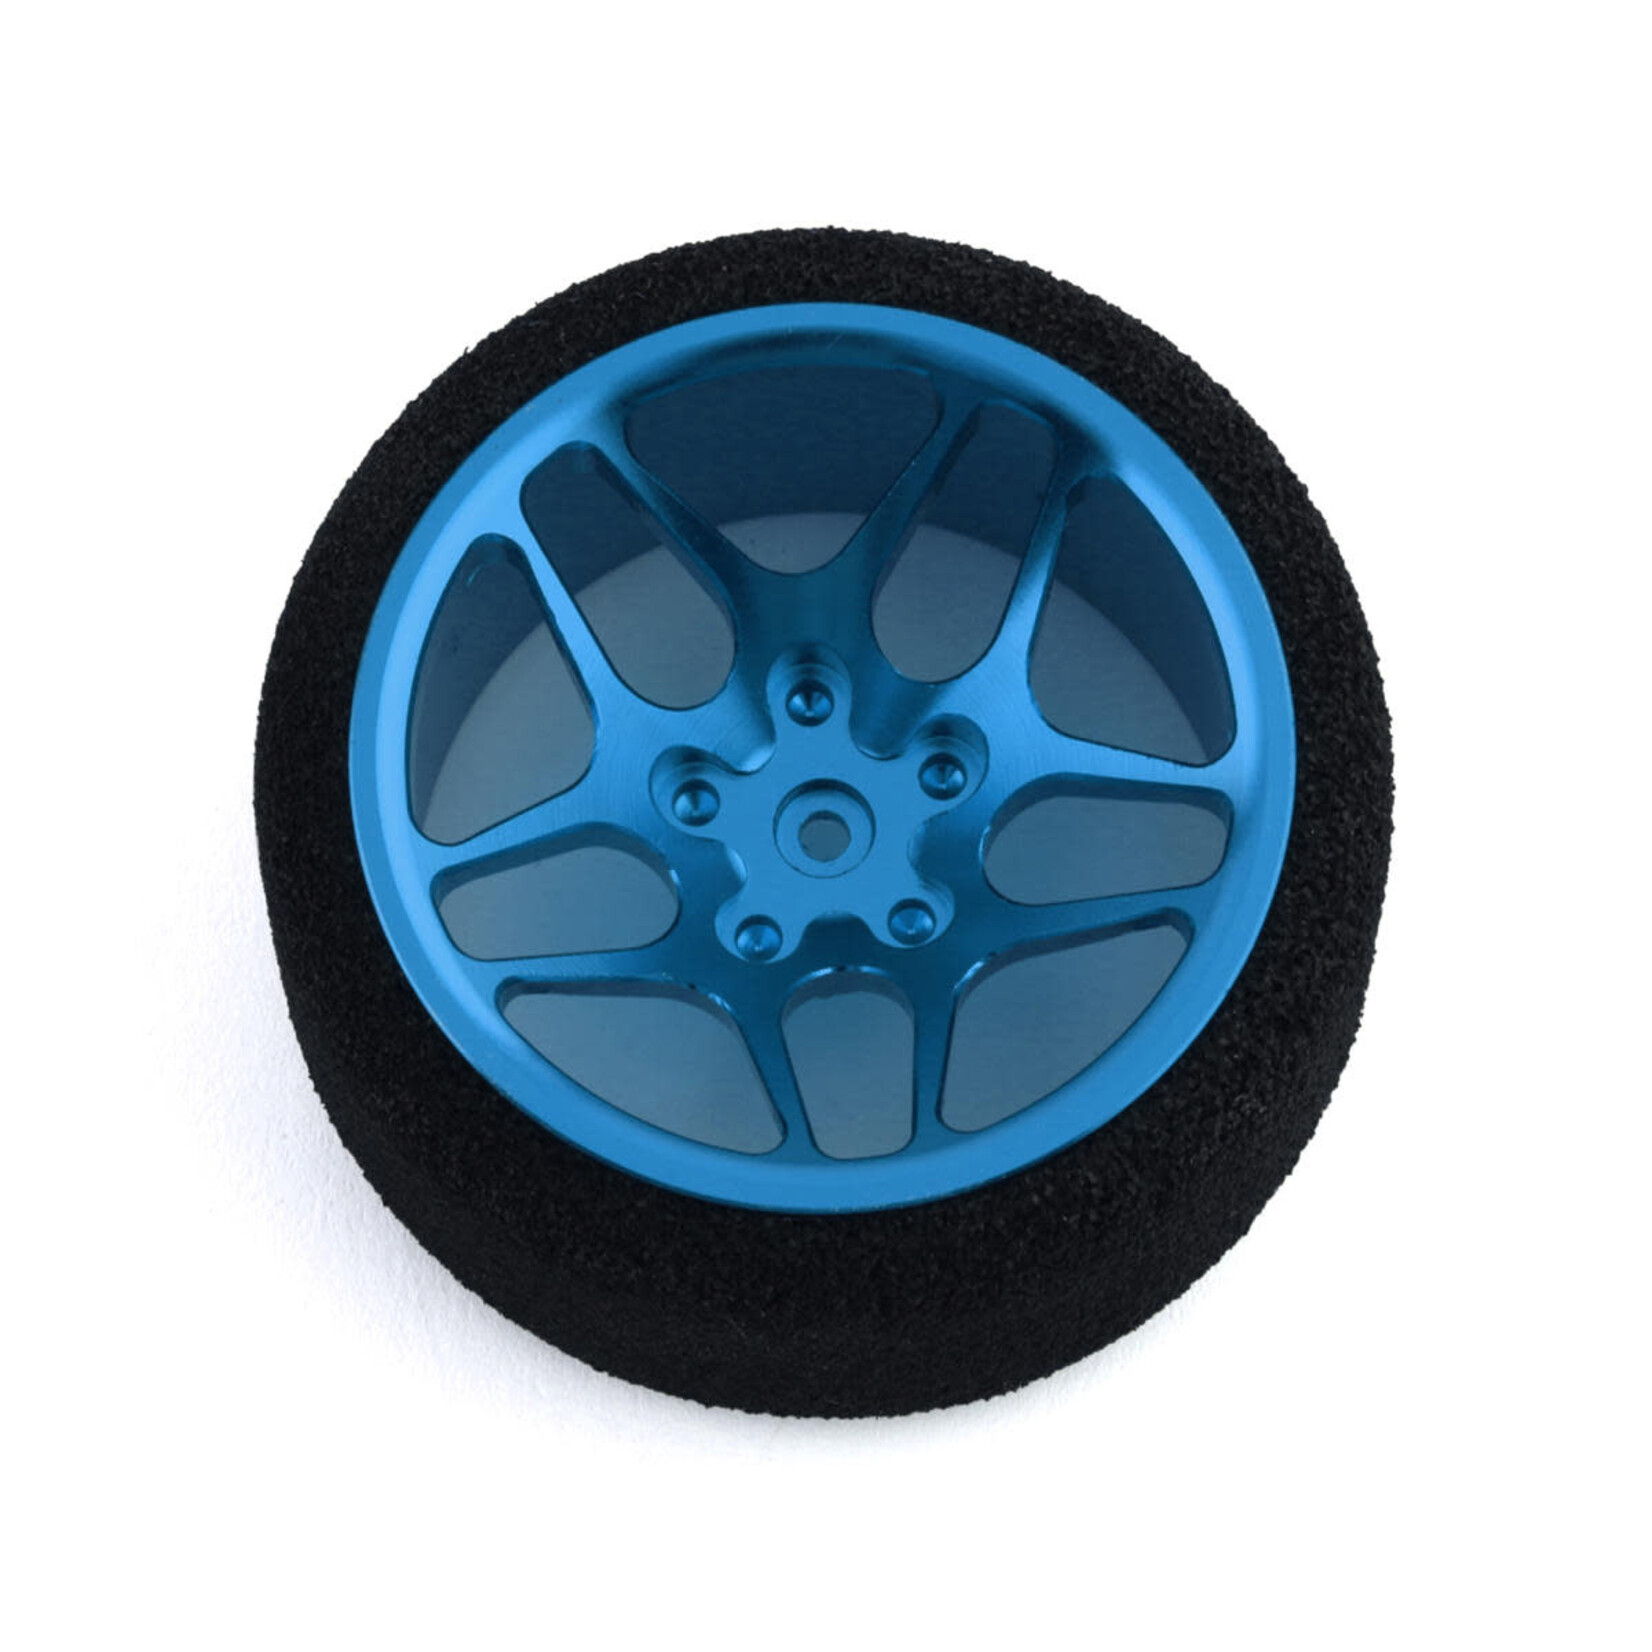 R-Design R-Design Spektrum DX5 10-Spoke Ultrawide Steering Wheel (Blue) #RDD7313